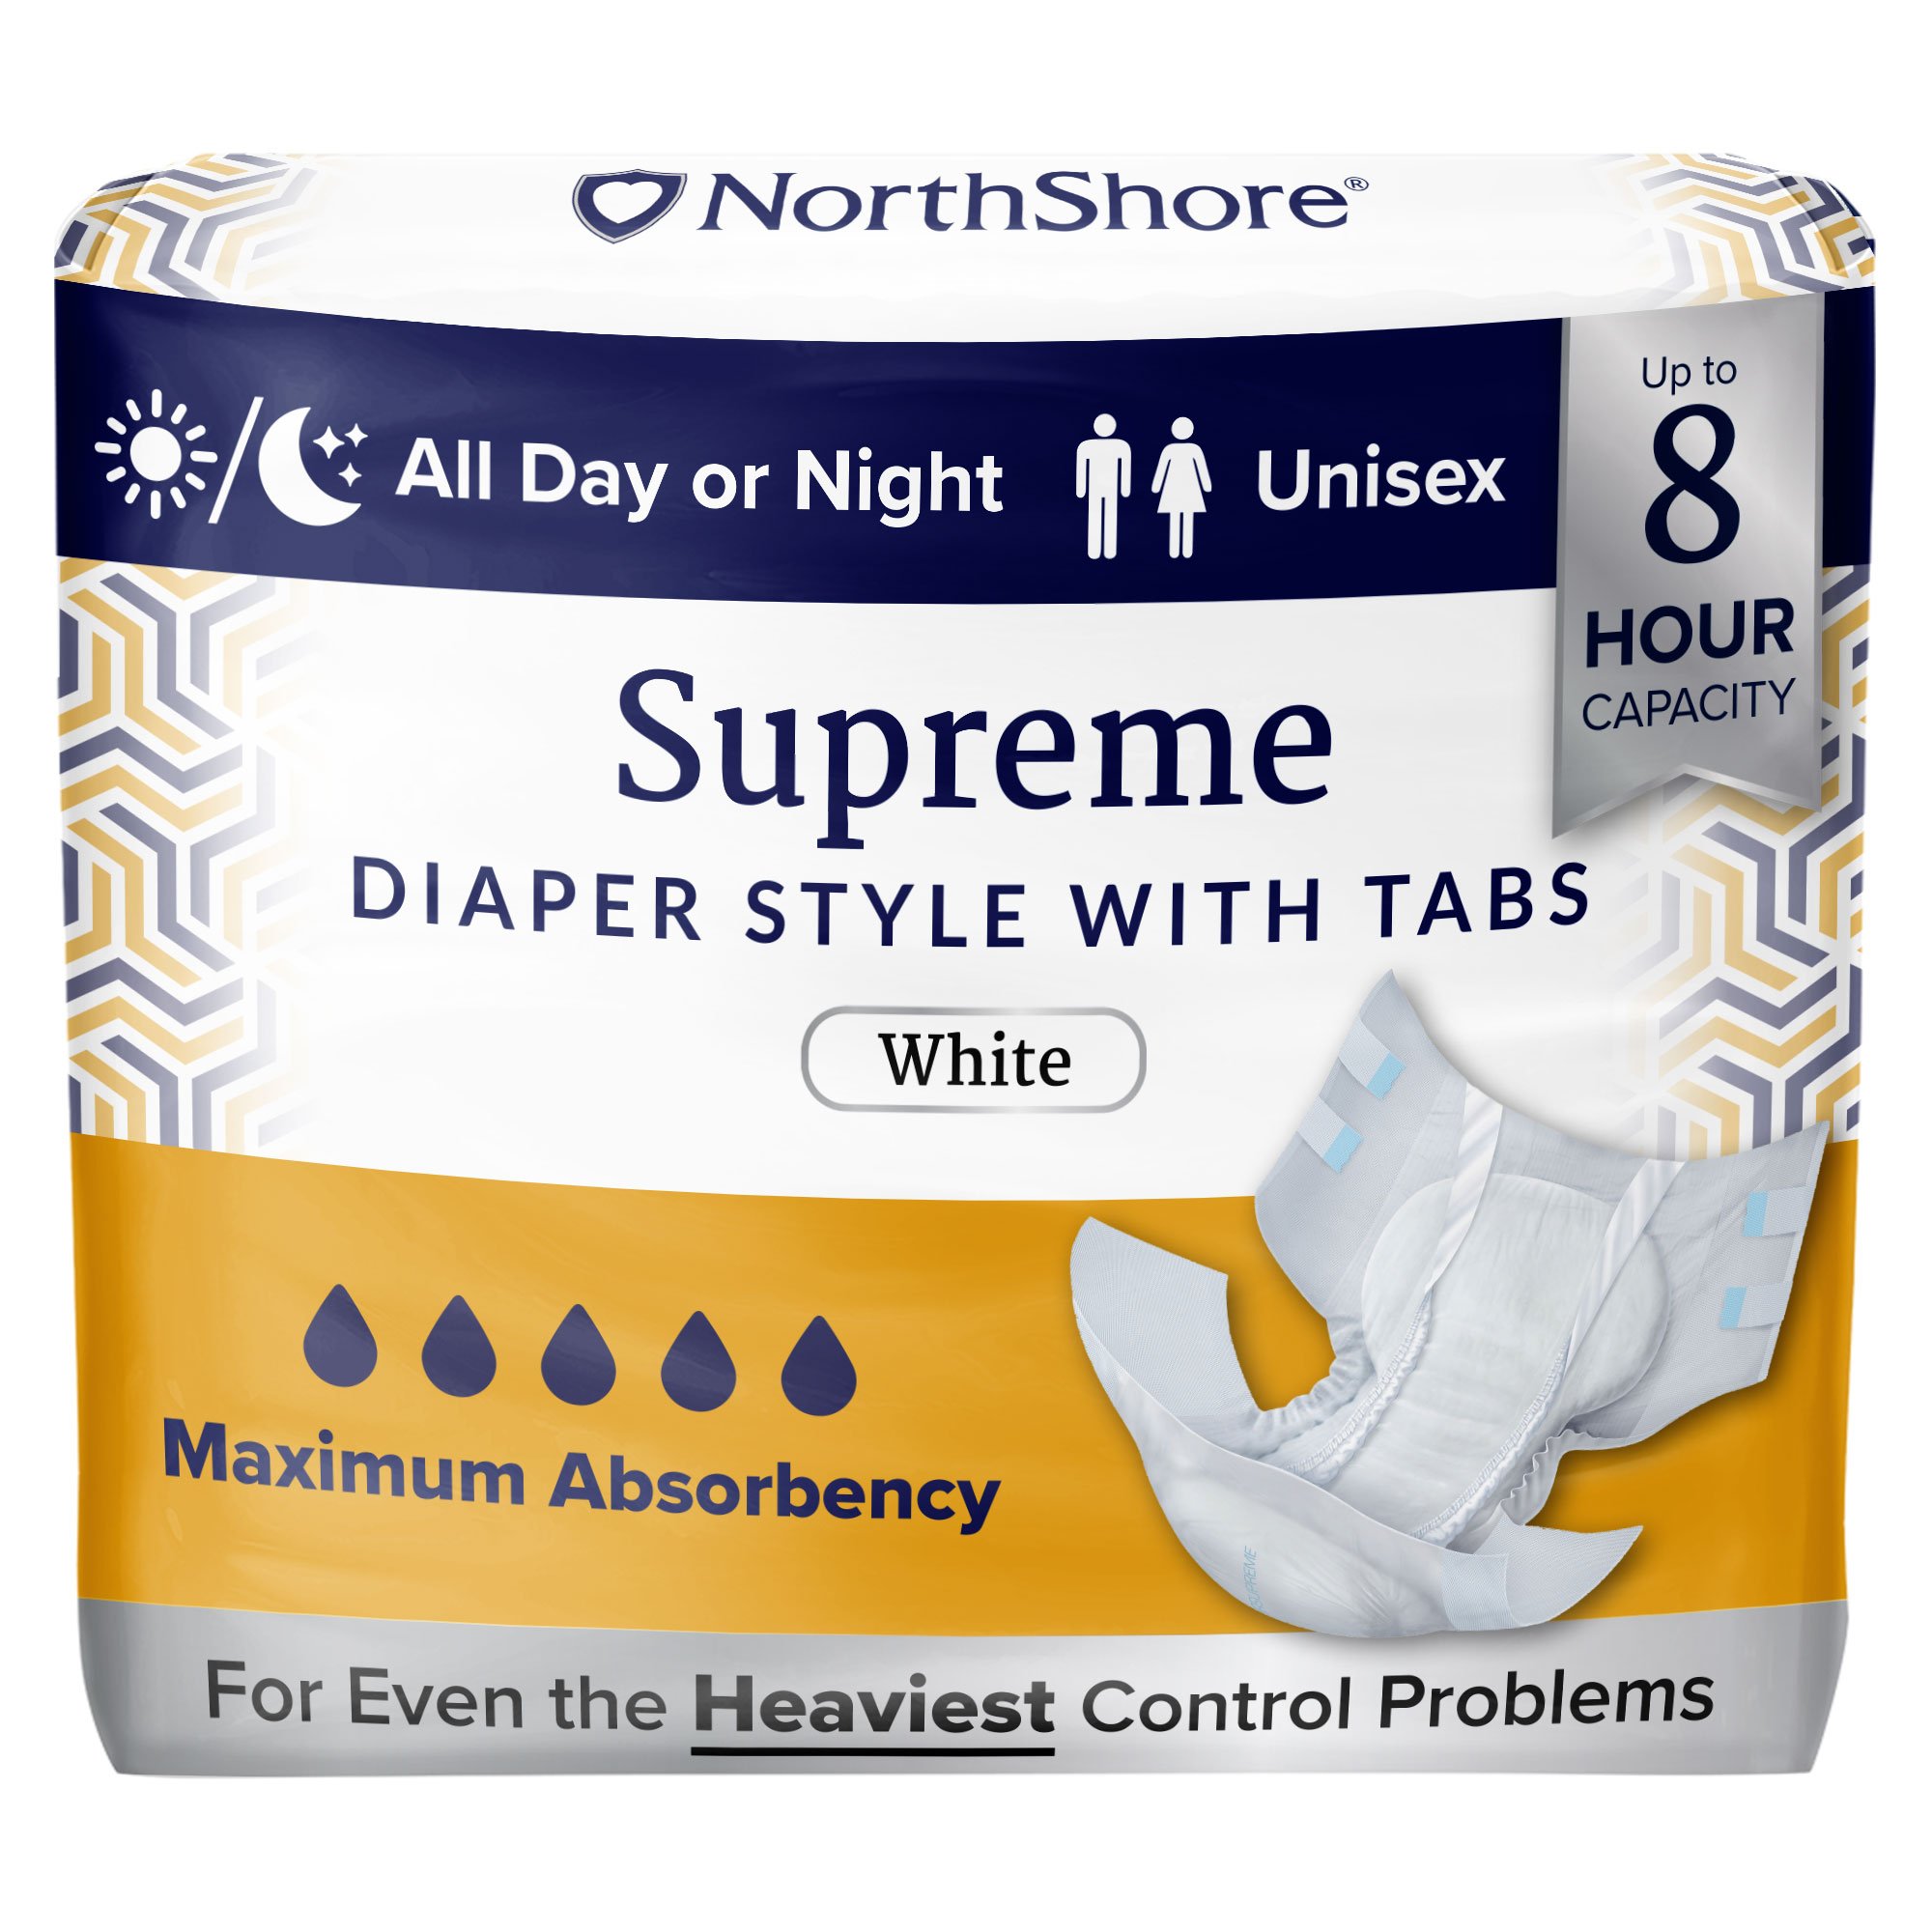 NorthShore Supreme adult diapers